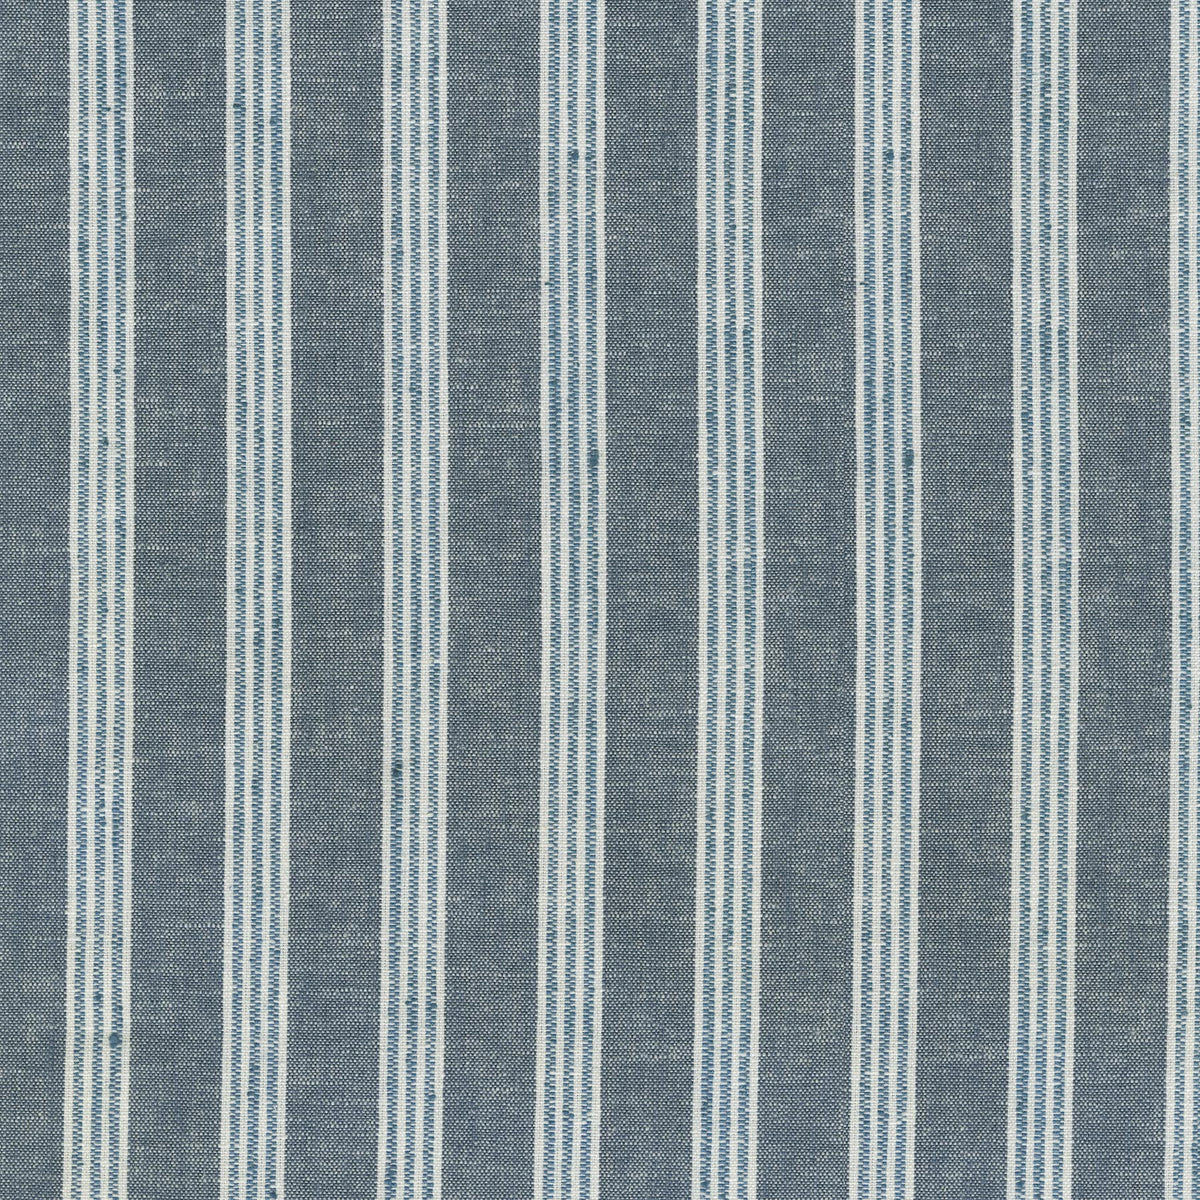 P/K Lifestyles Montaro Stripe - Indigo 411241 Upholstery Fabric